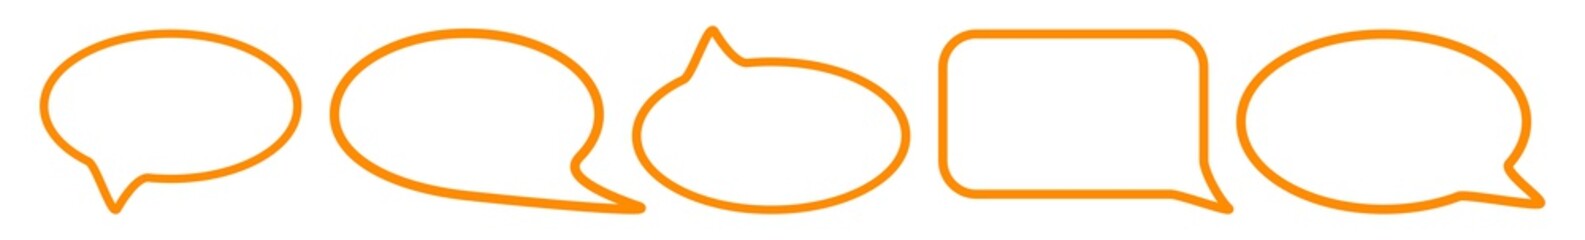 Speech Bubble Balloon Icon orange | Blank Shape Bubbles | Communication Symbol | Message Logo | Cartoon Sign | Isolated | Variations